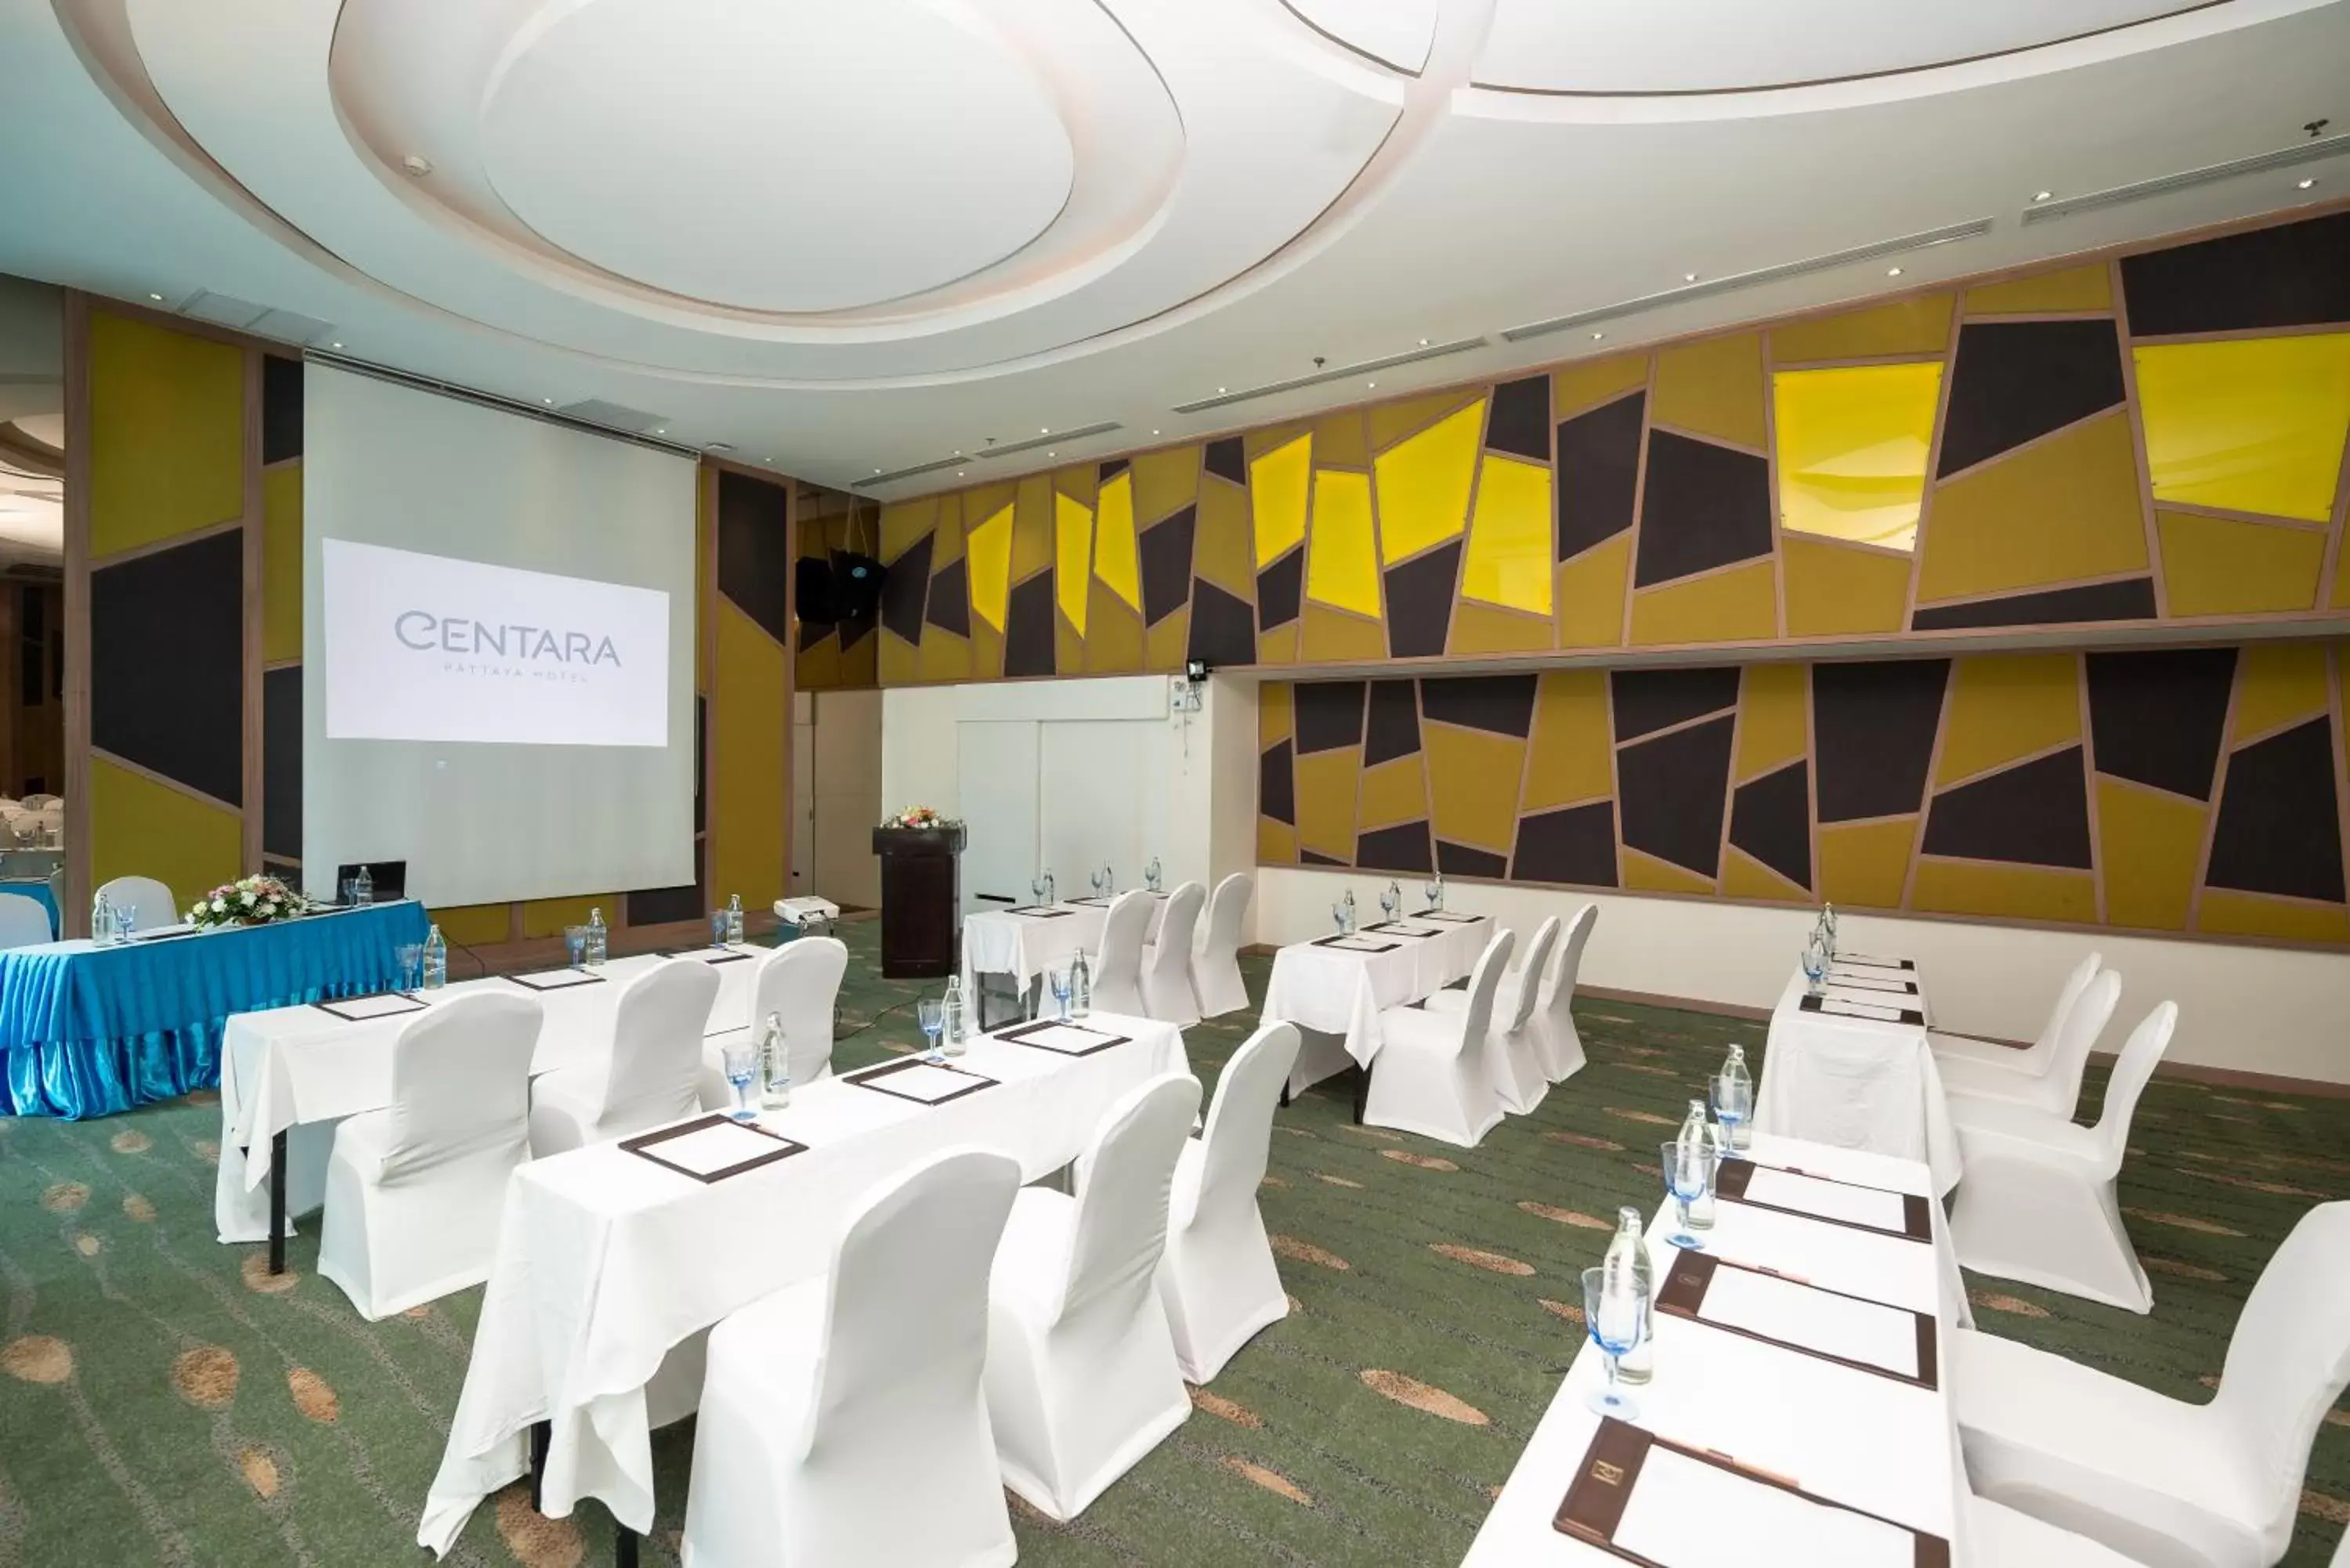 Meeting/conference room in Centara Pattaya Hotel